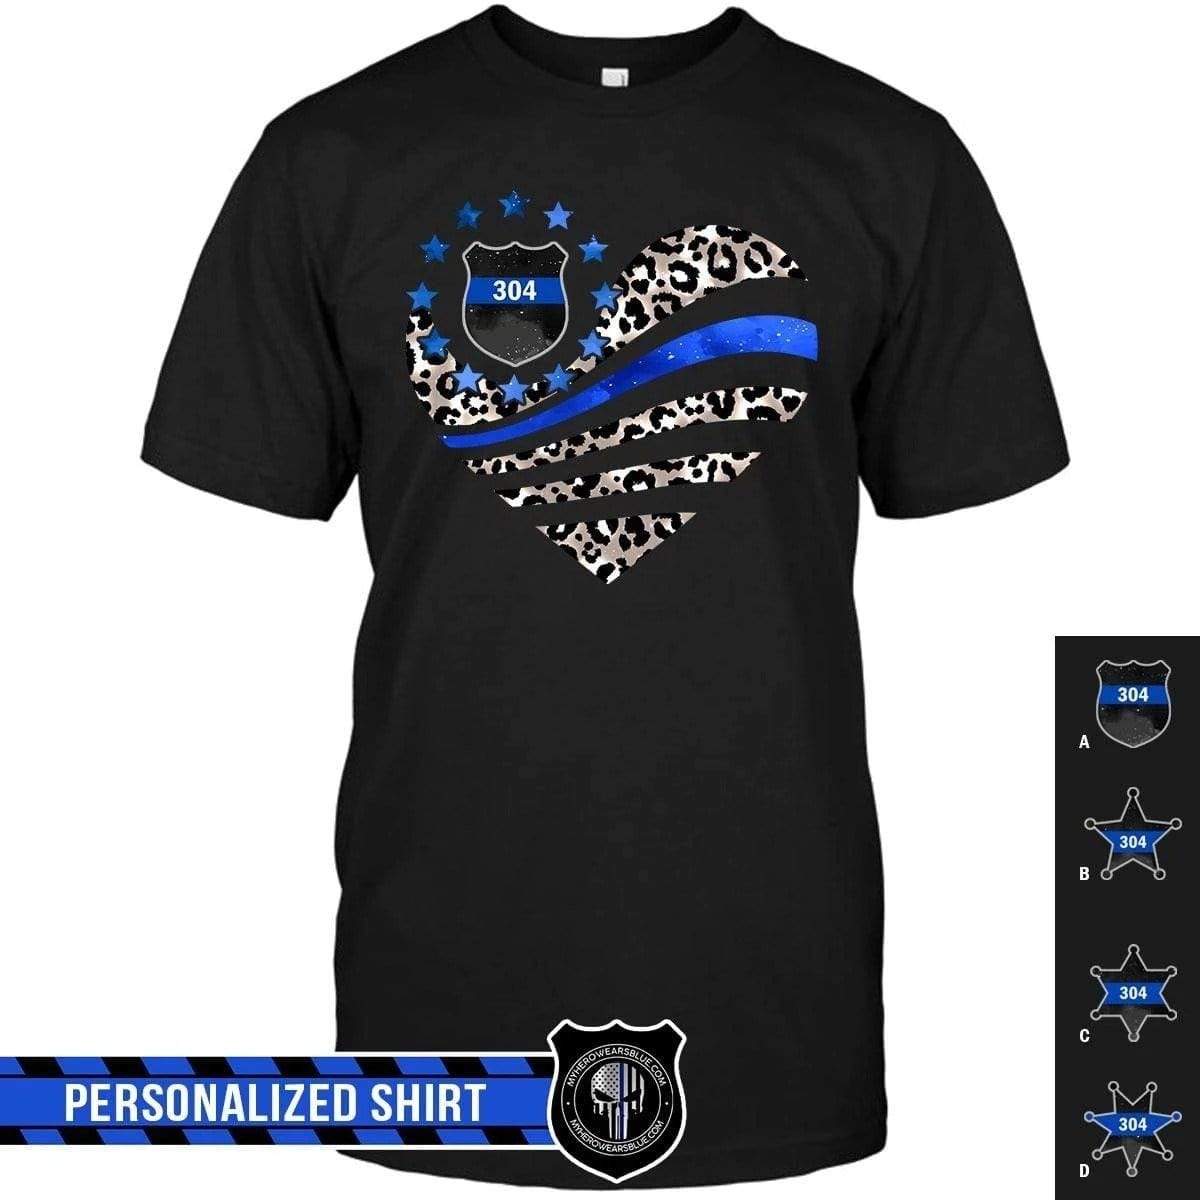 Apparel S / Black Personalized Shirt - Leopard Patterned Flag Heart - Police - DSAPP